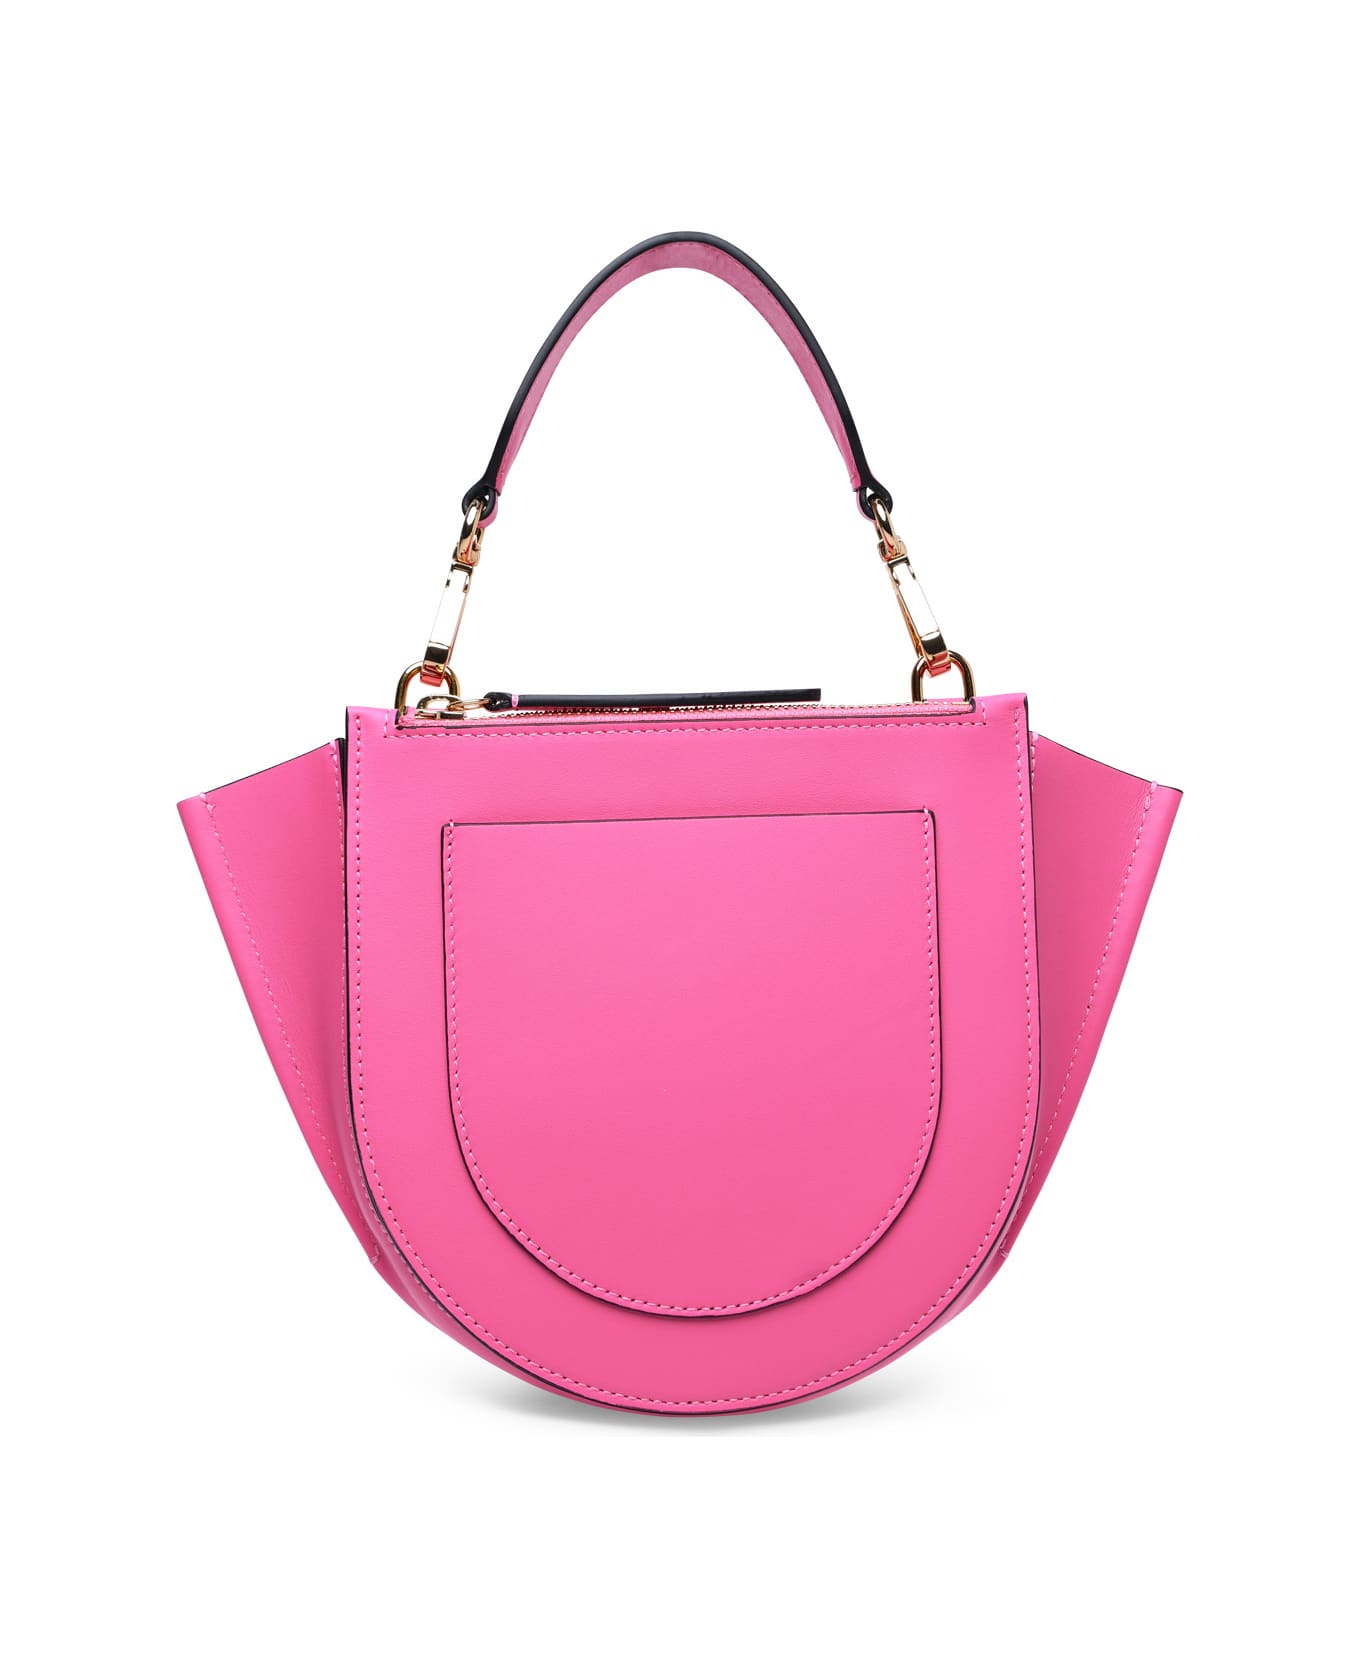 Wandler 'hortensia' Mini Bag In Pink Calf Leather - Fucsia